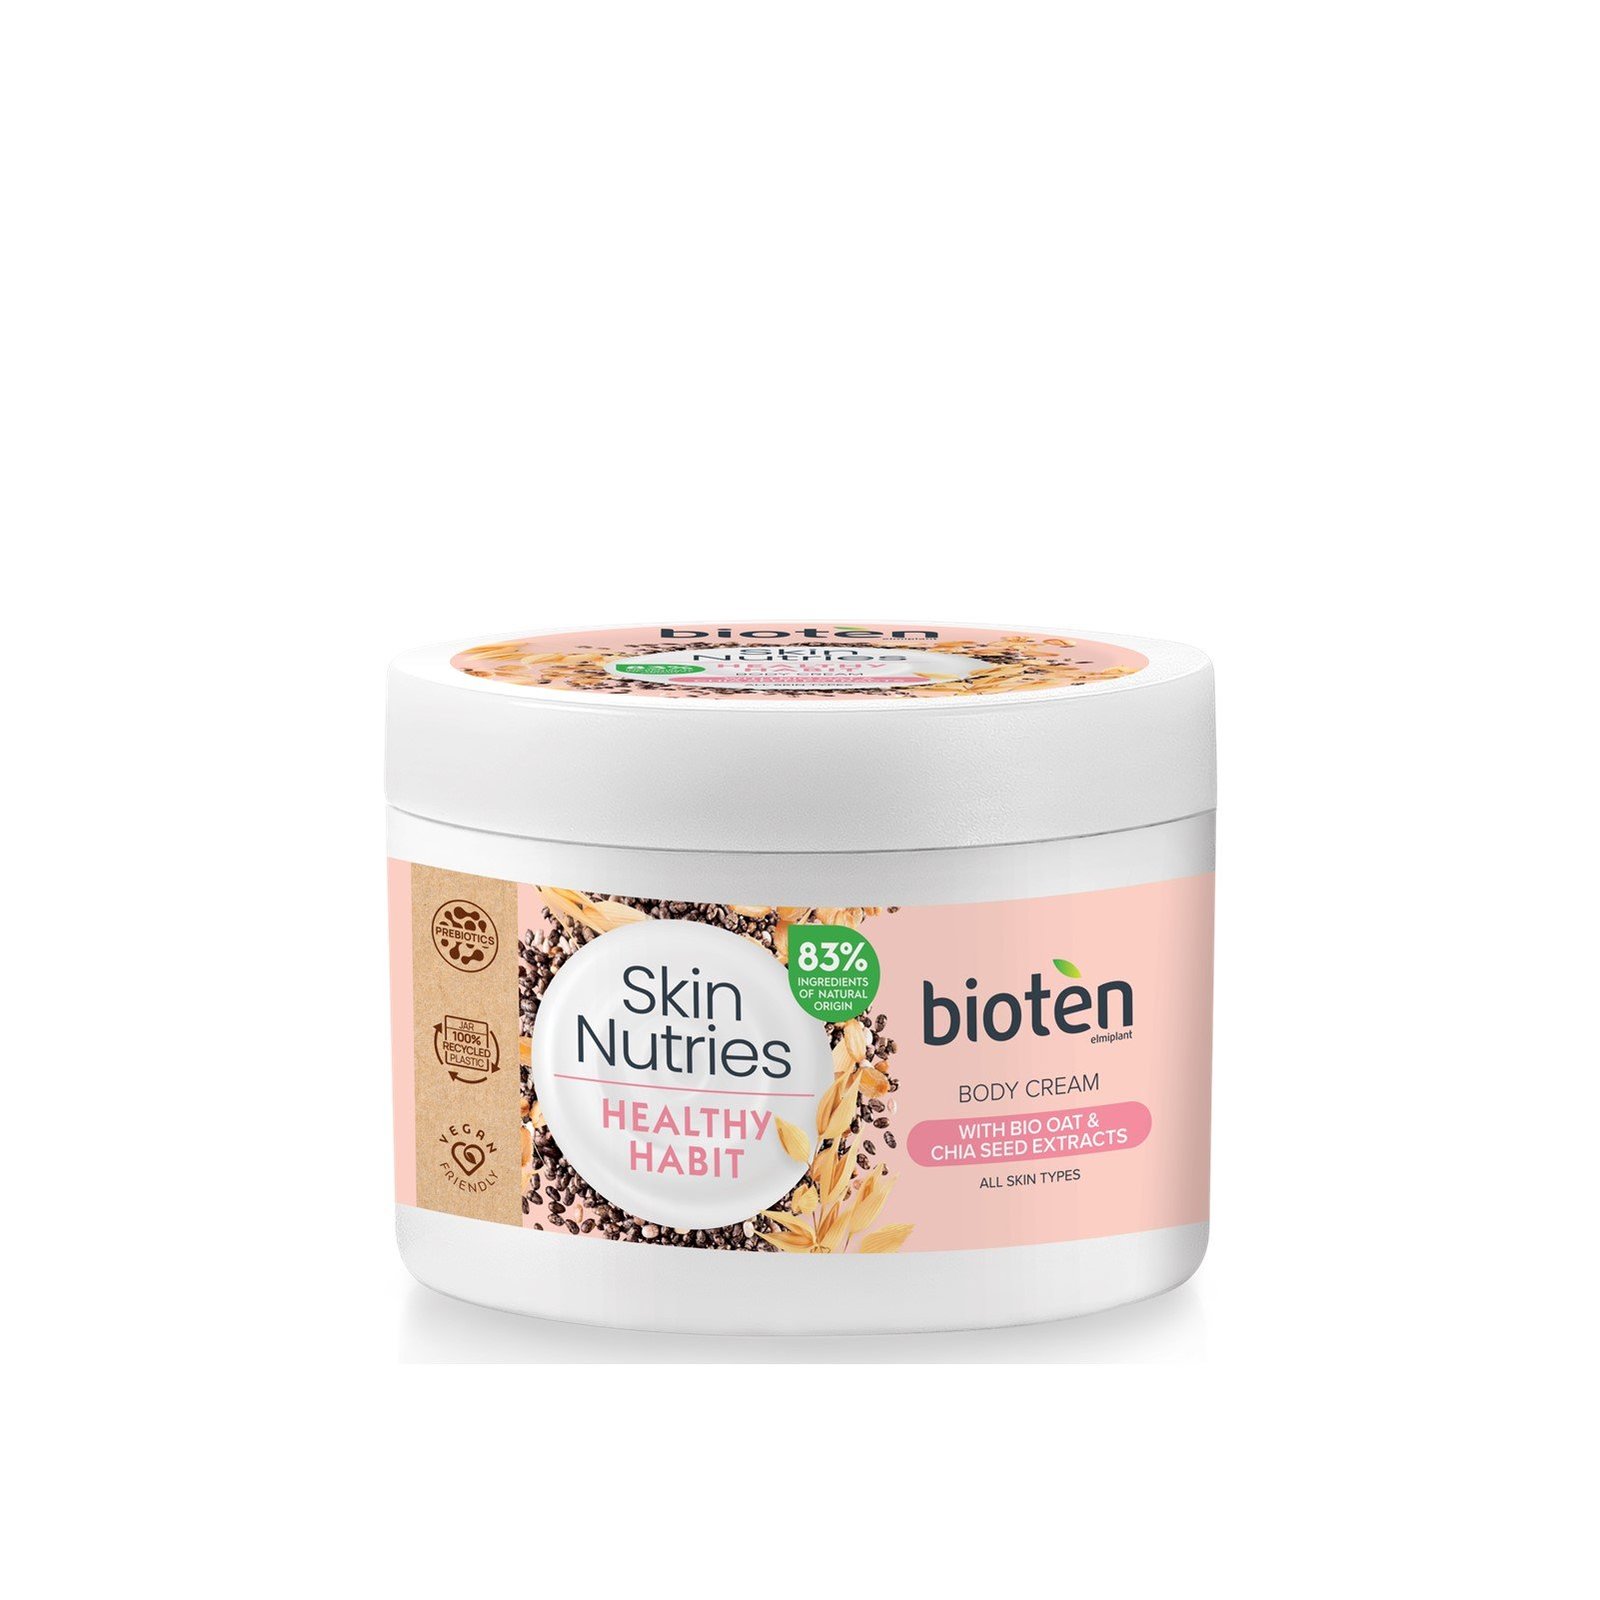 bioten Skin Nutries Healthy Habit Body Cream 250ml